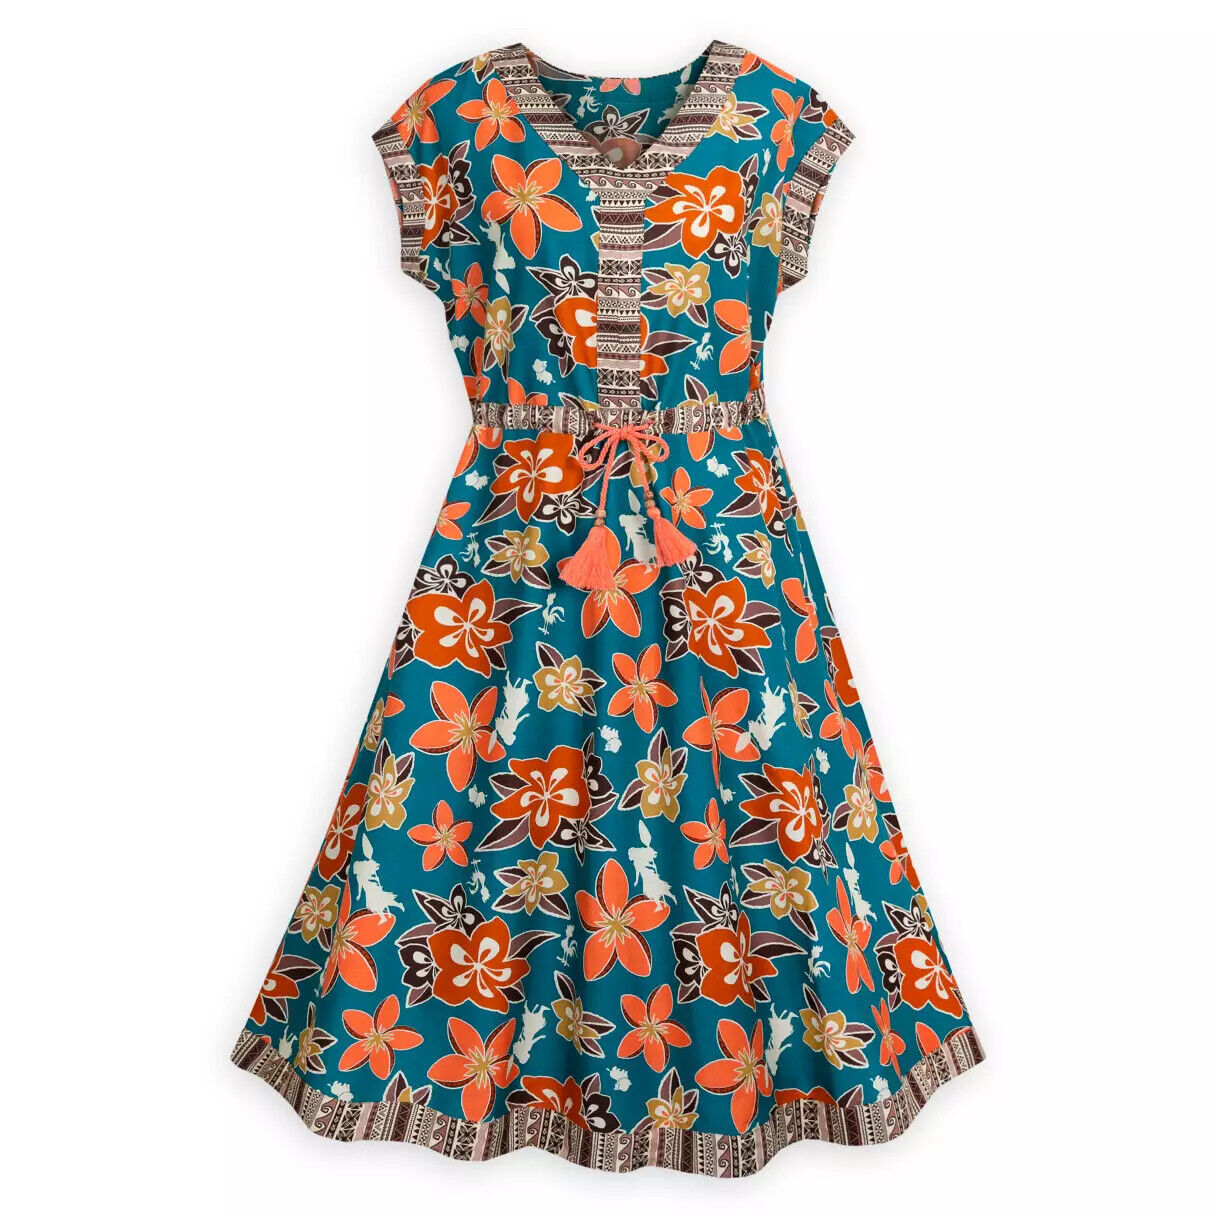 Moana Dress - Disney Dress Shop - 100% Organic Cotton - S, L, XL - BNWT